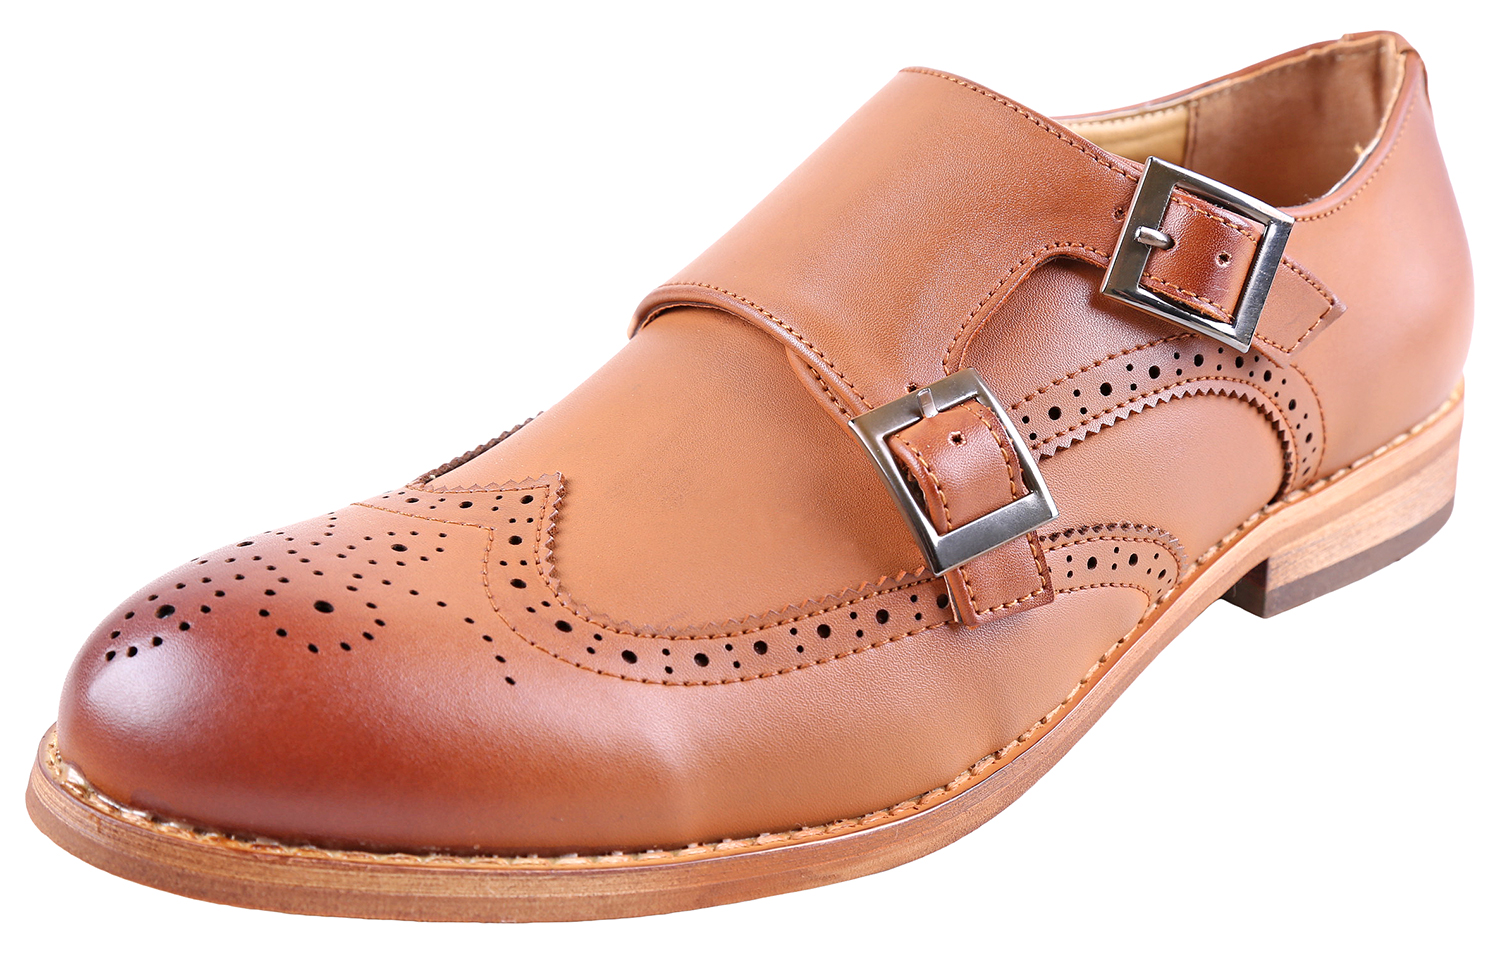 Urban Fox Allen Men's Dress Shoe | Double Monk Strap | Brogue | Wingtip Shoes for Men | Light Brown 14 M US - image 1 of 7